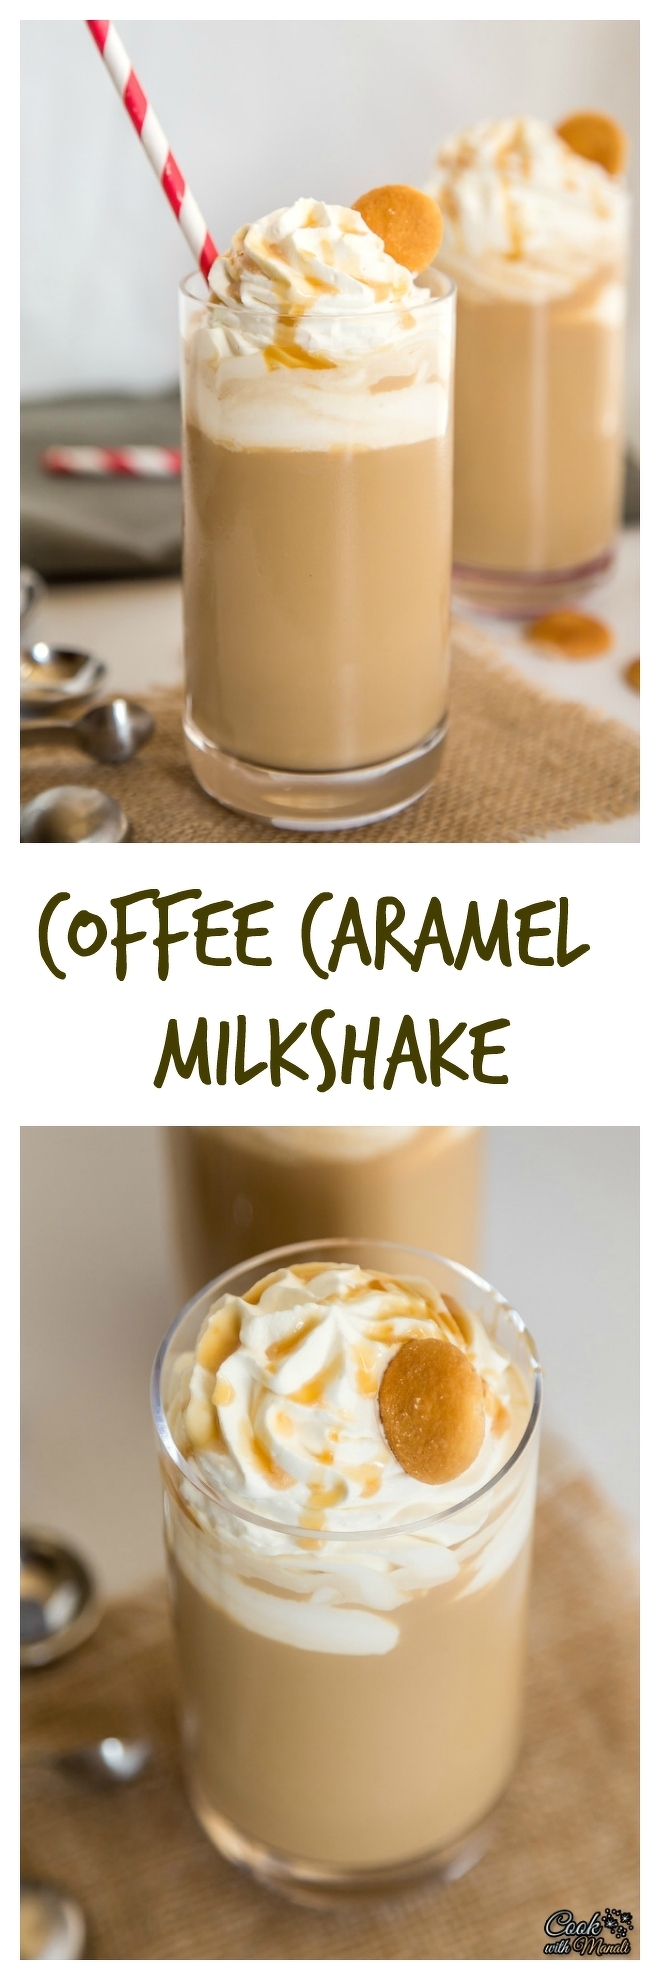 Coffee Caramel Milkshake Collage-nocwm